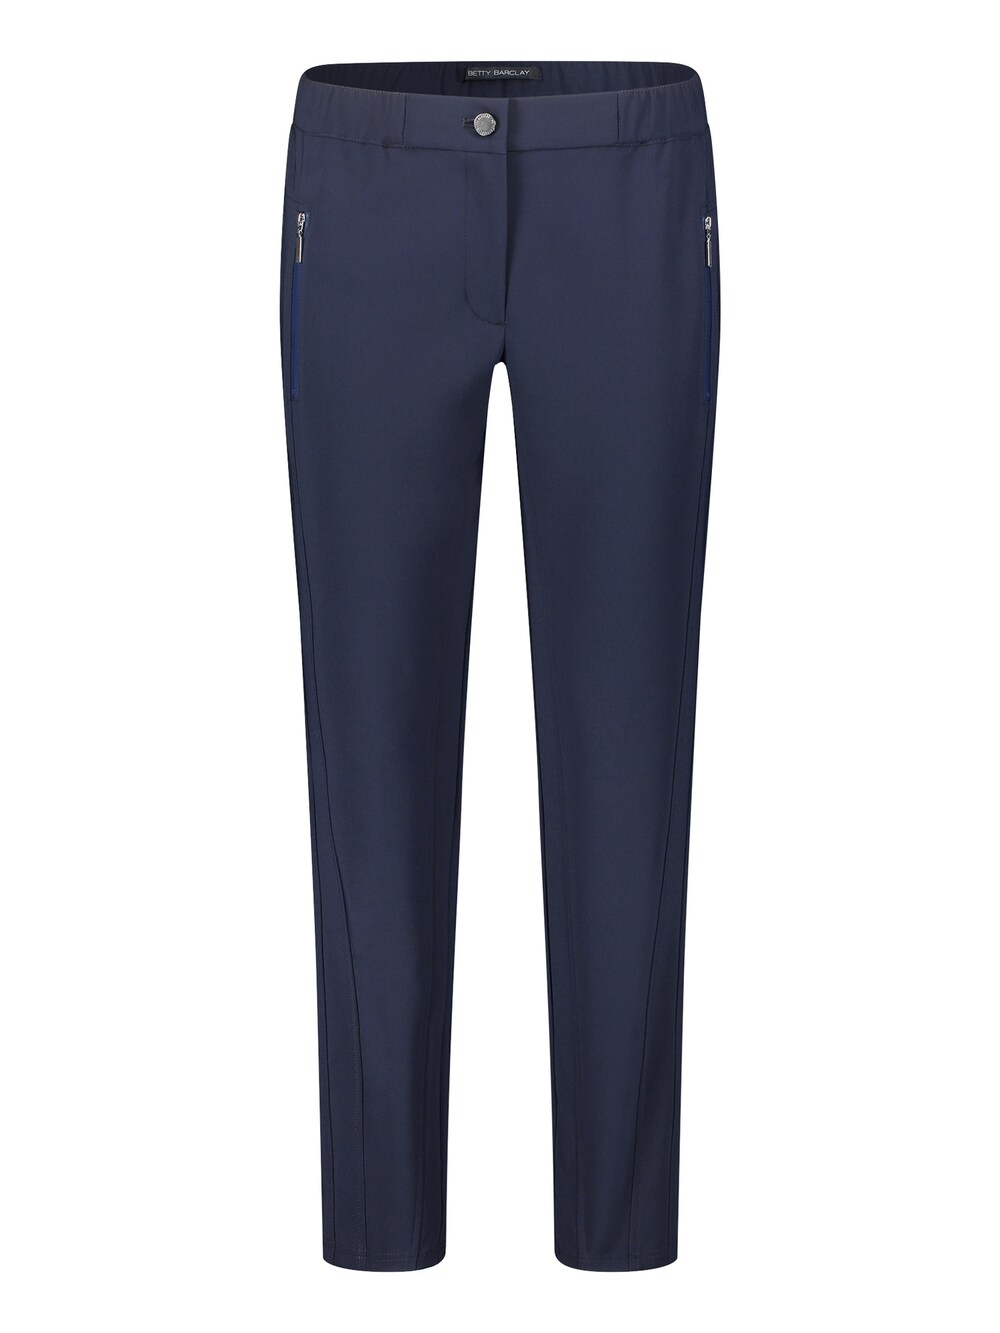 Узкие брюки Betty Barclay, темно-синий брюки женские betty barclay артикул 6555 2714 цвет темно синий 8345 размер 44